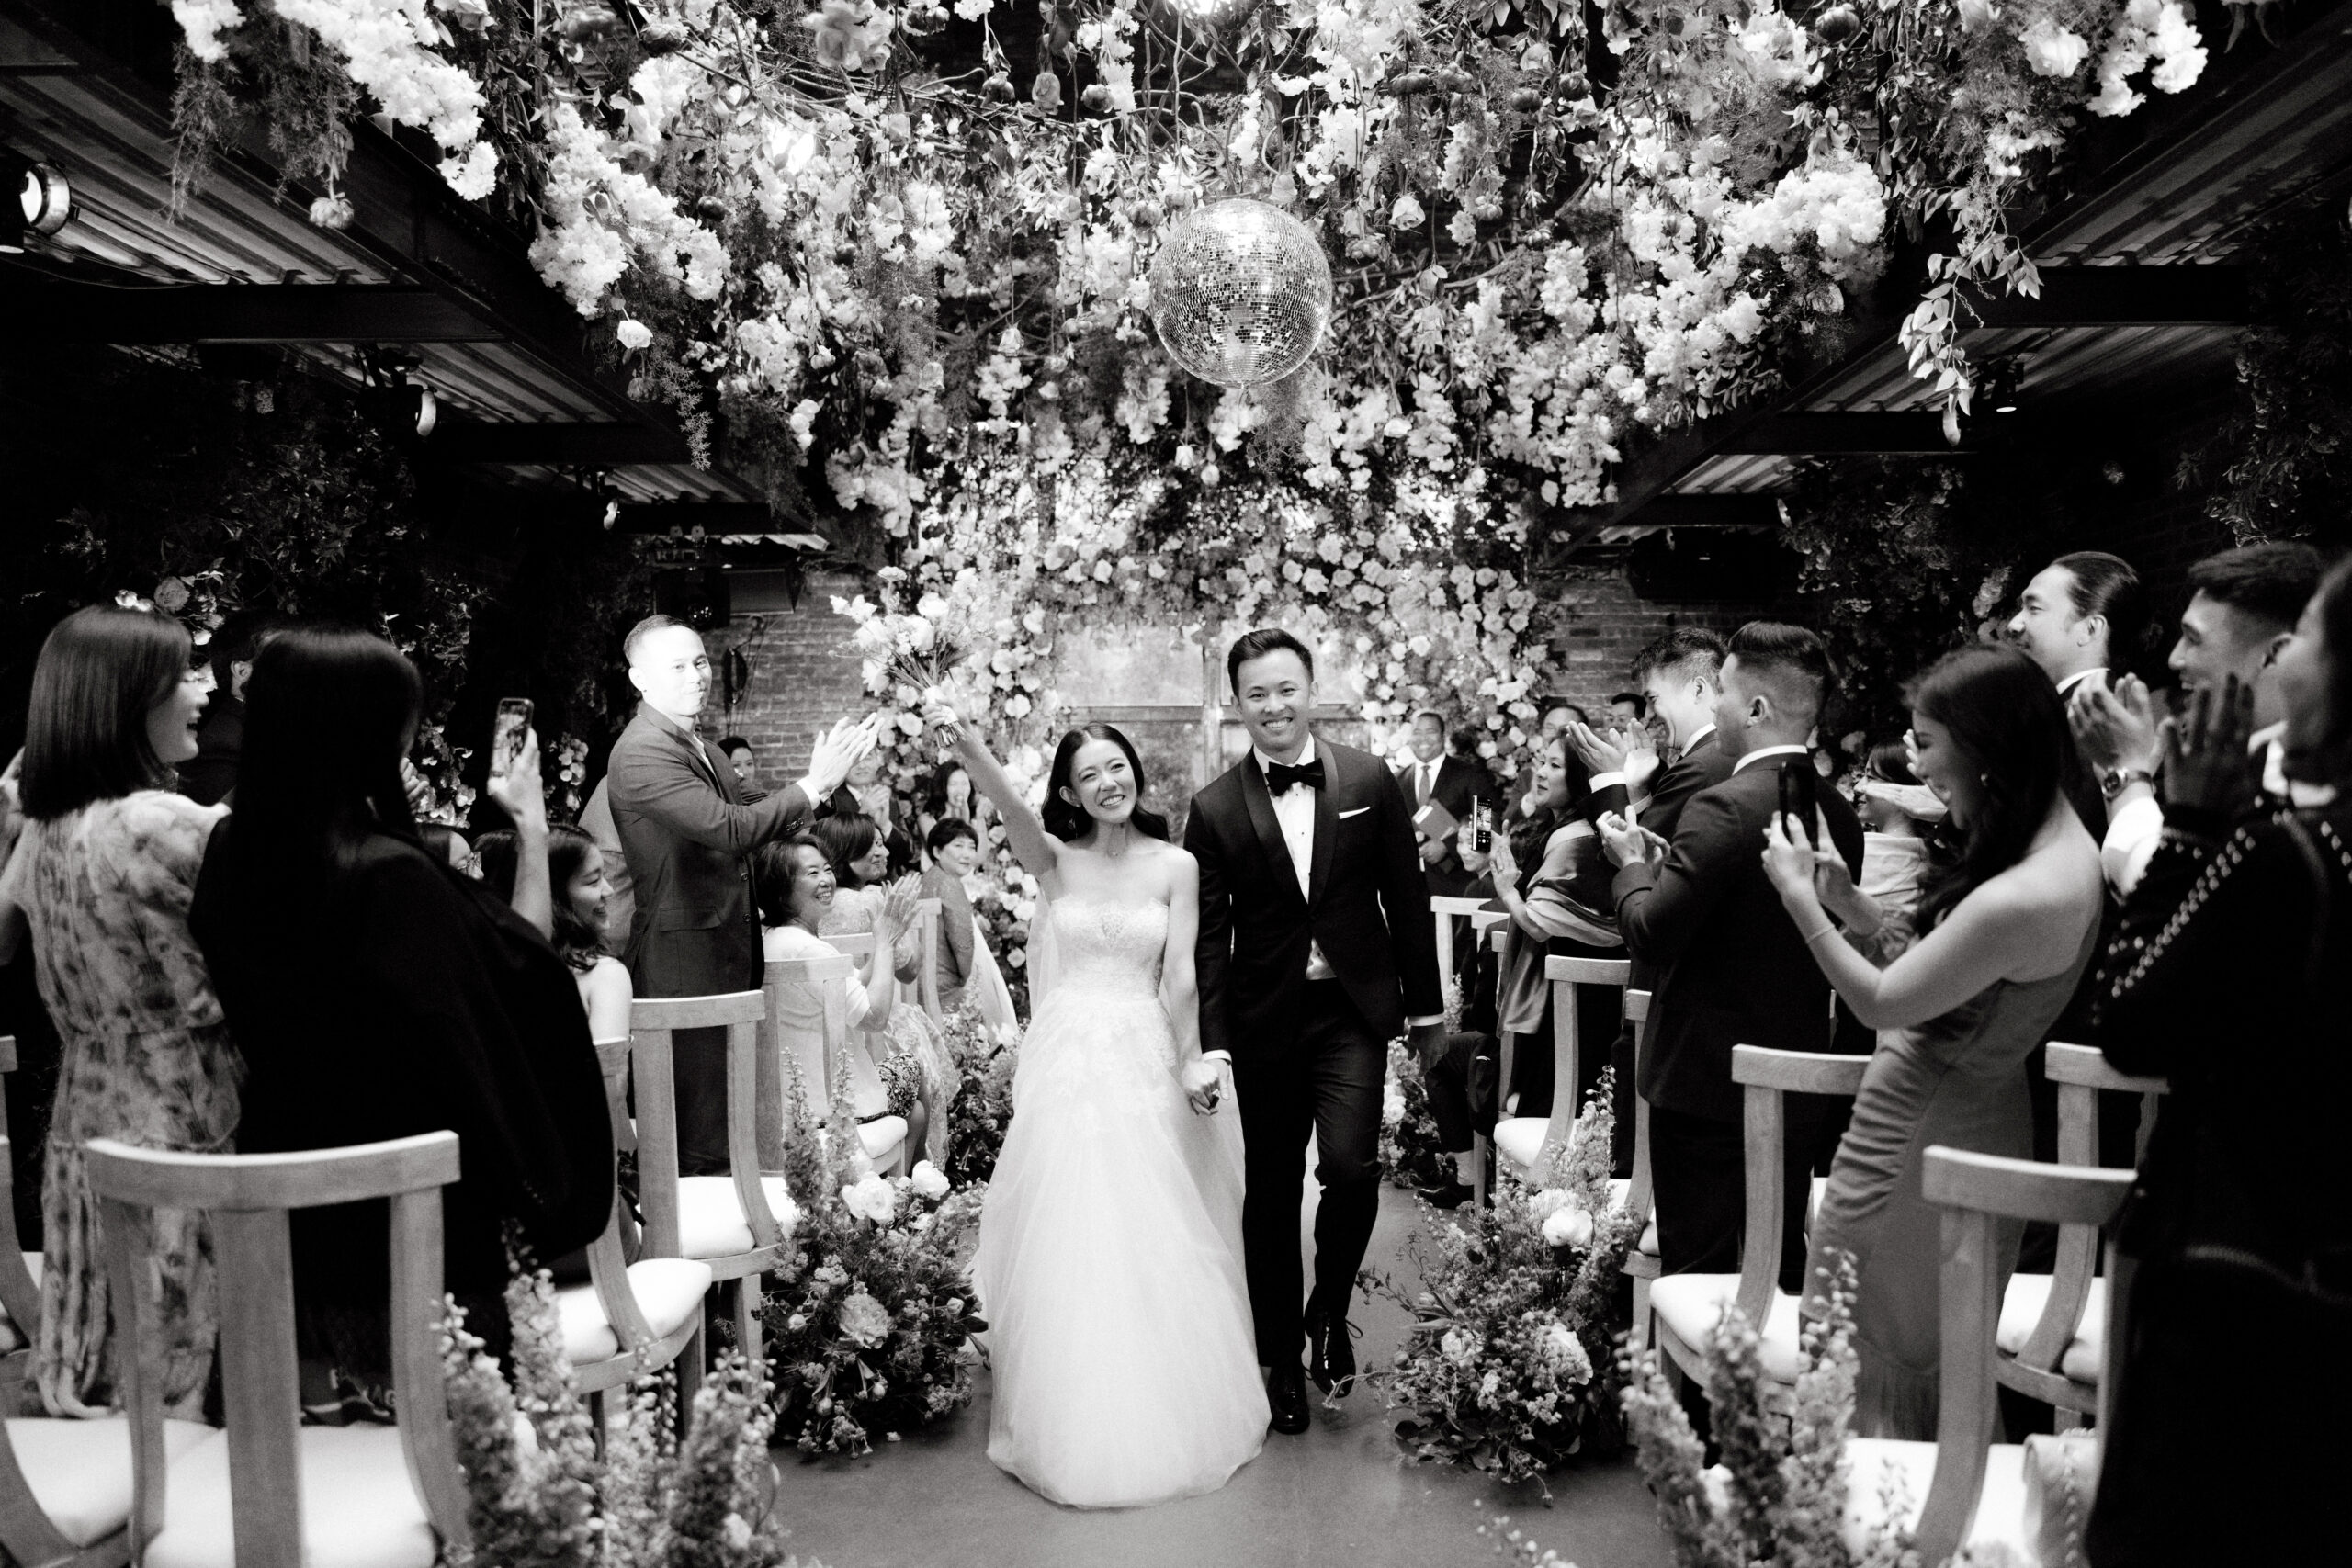 Editorial black and white wedding ceremony image by Jenny Fu Studio